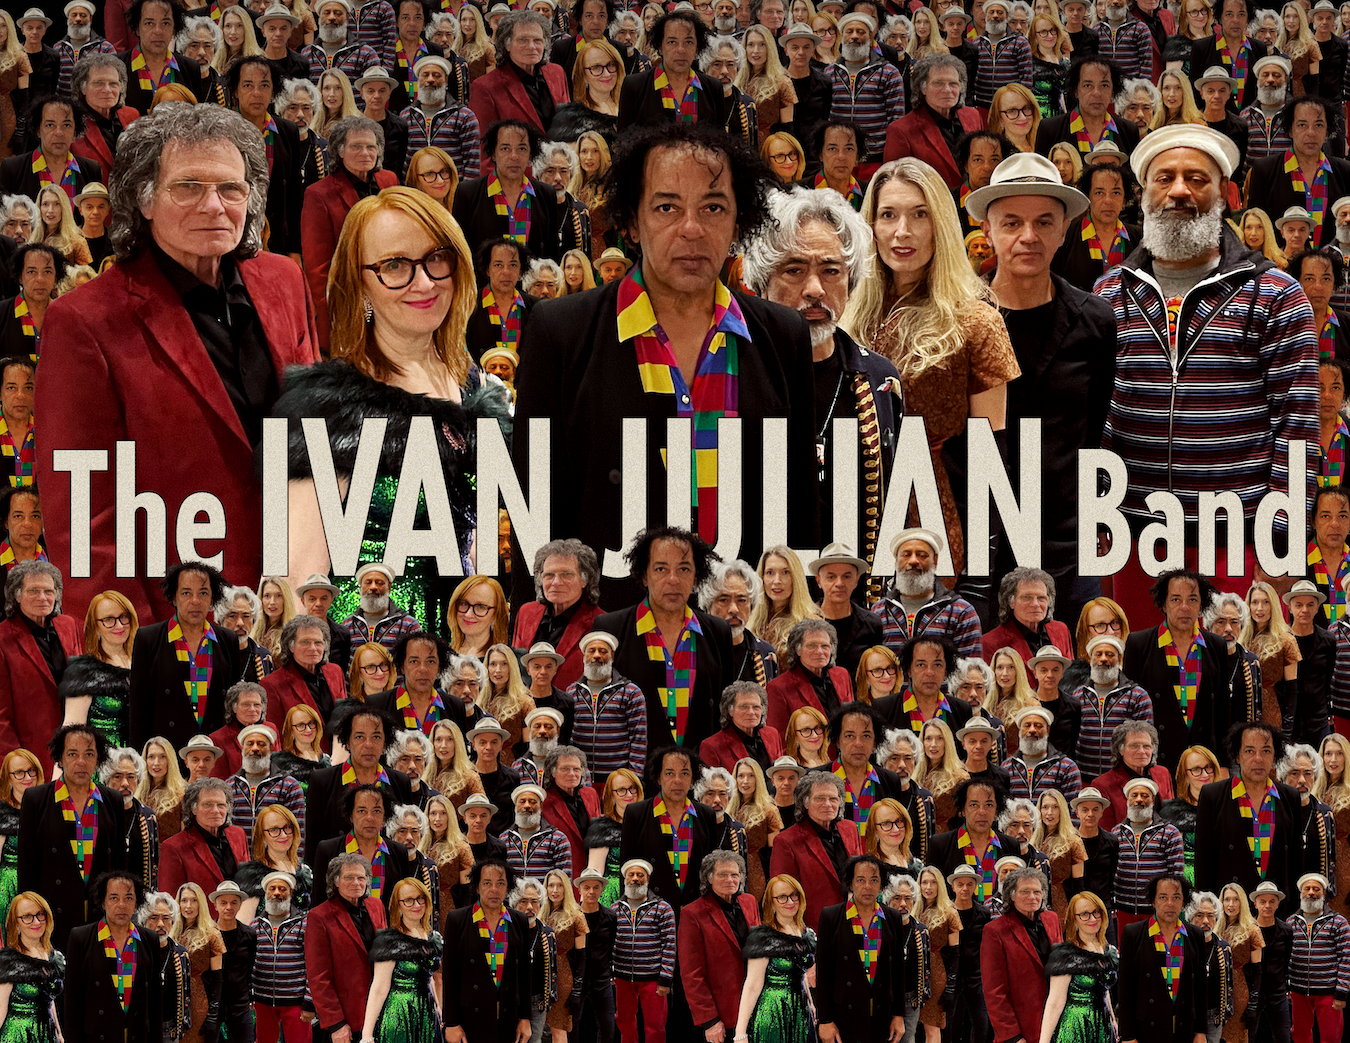 The Ivan Julian Band